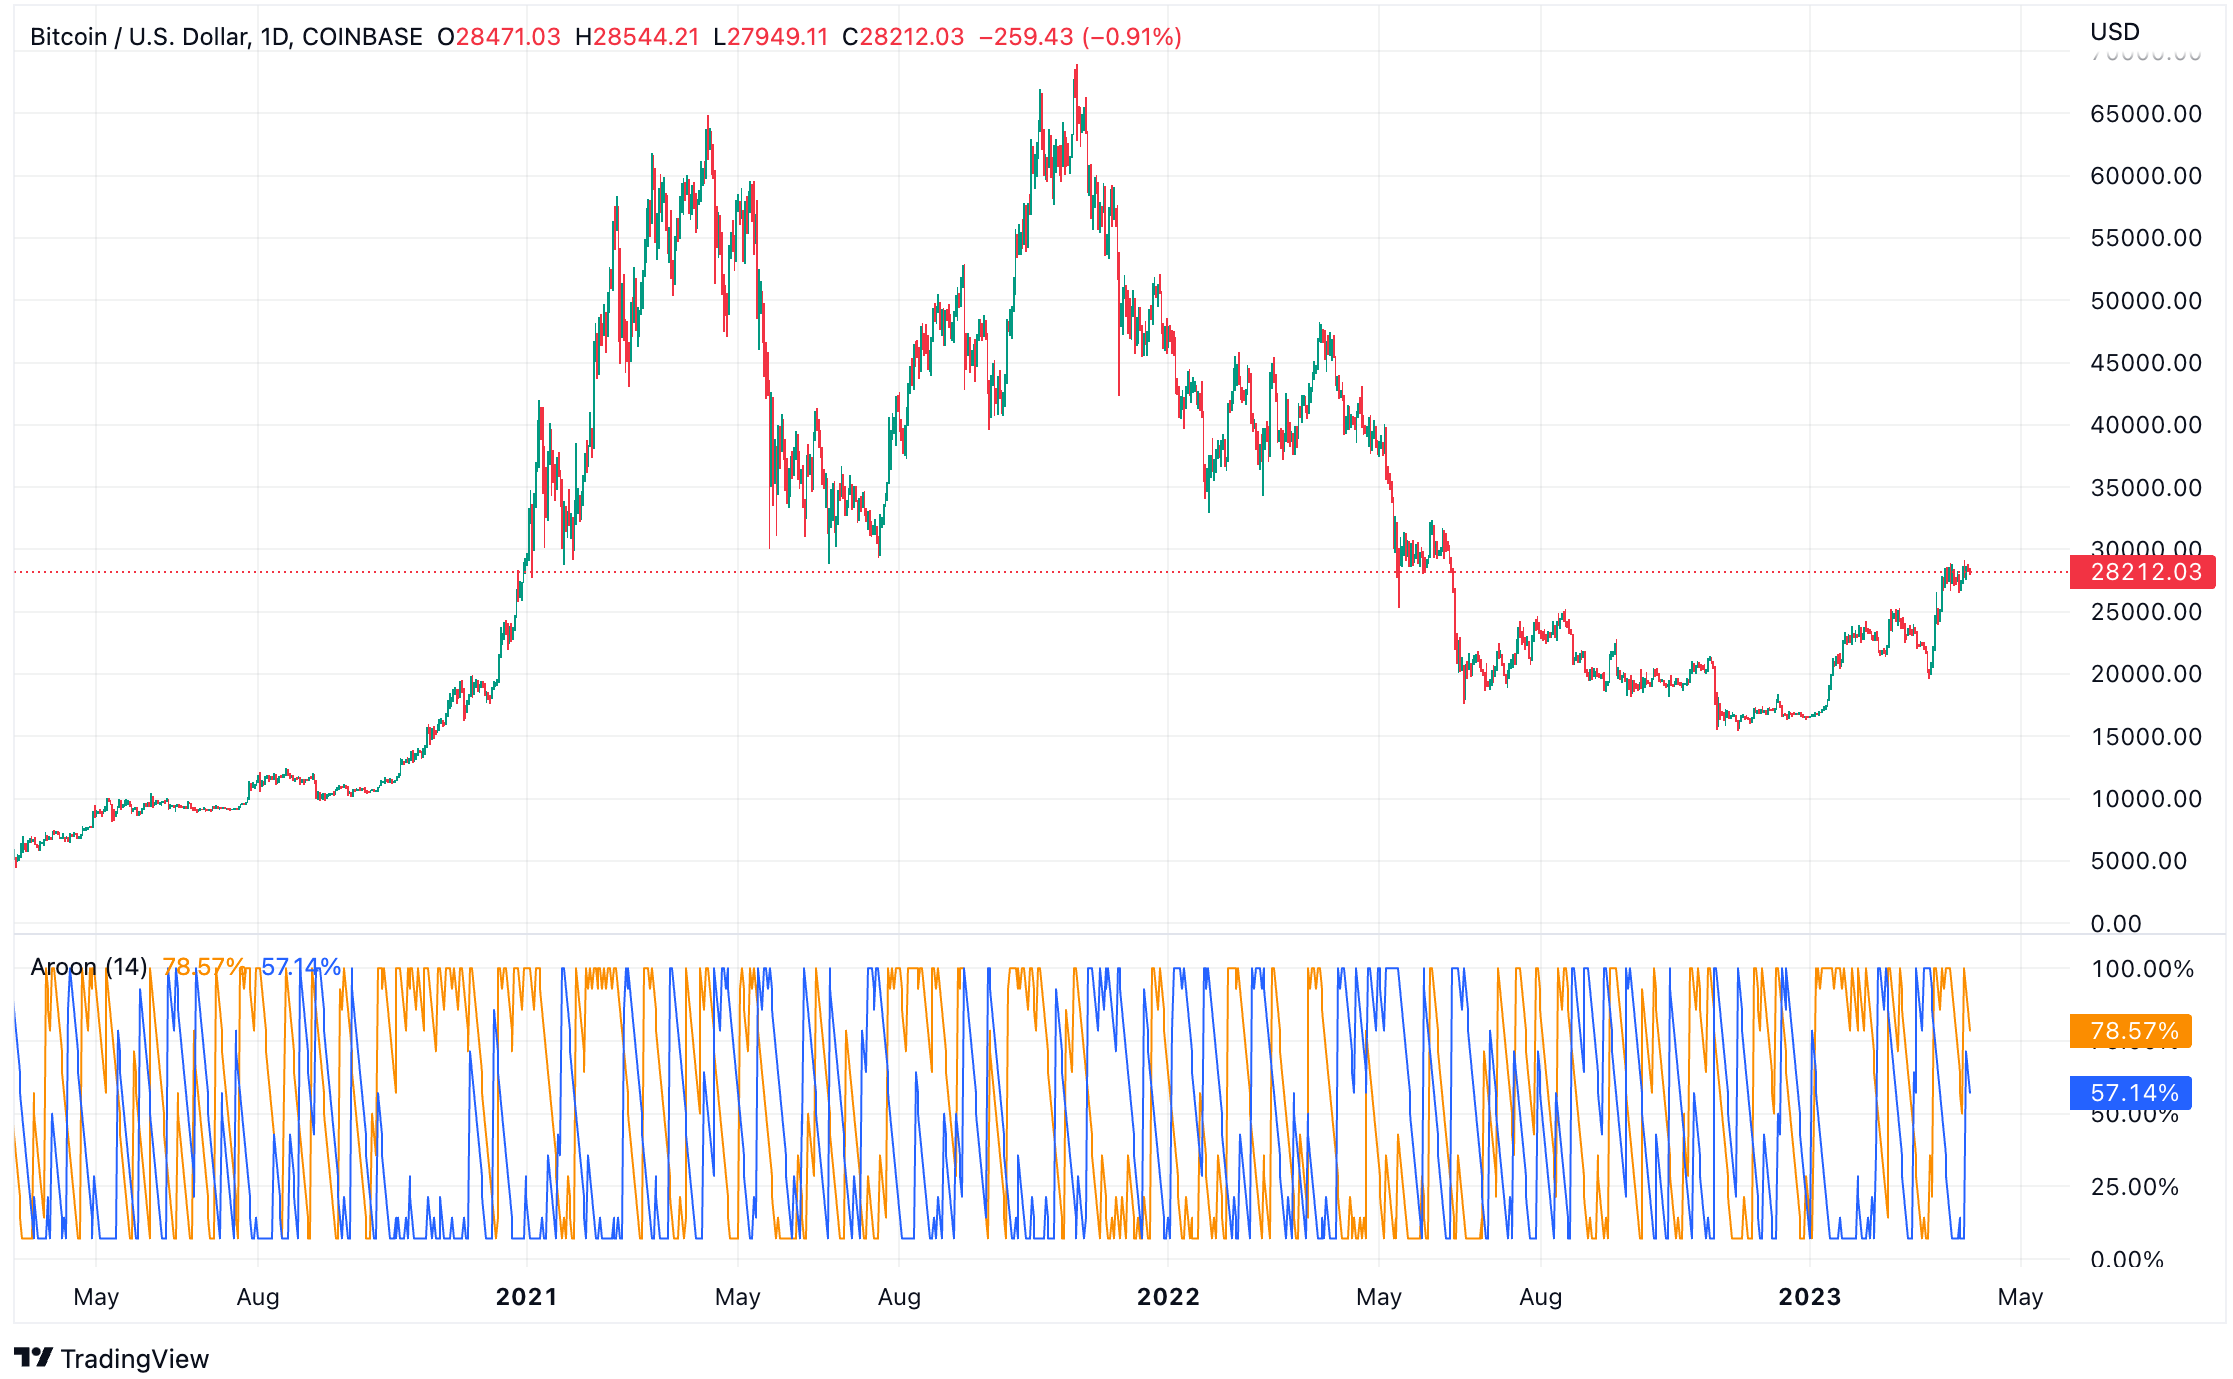 Aroon Indicator Bitcoin Price Prediction